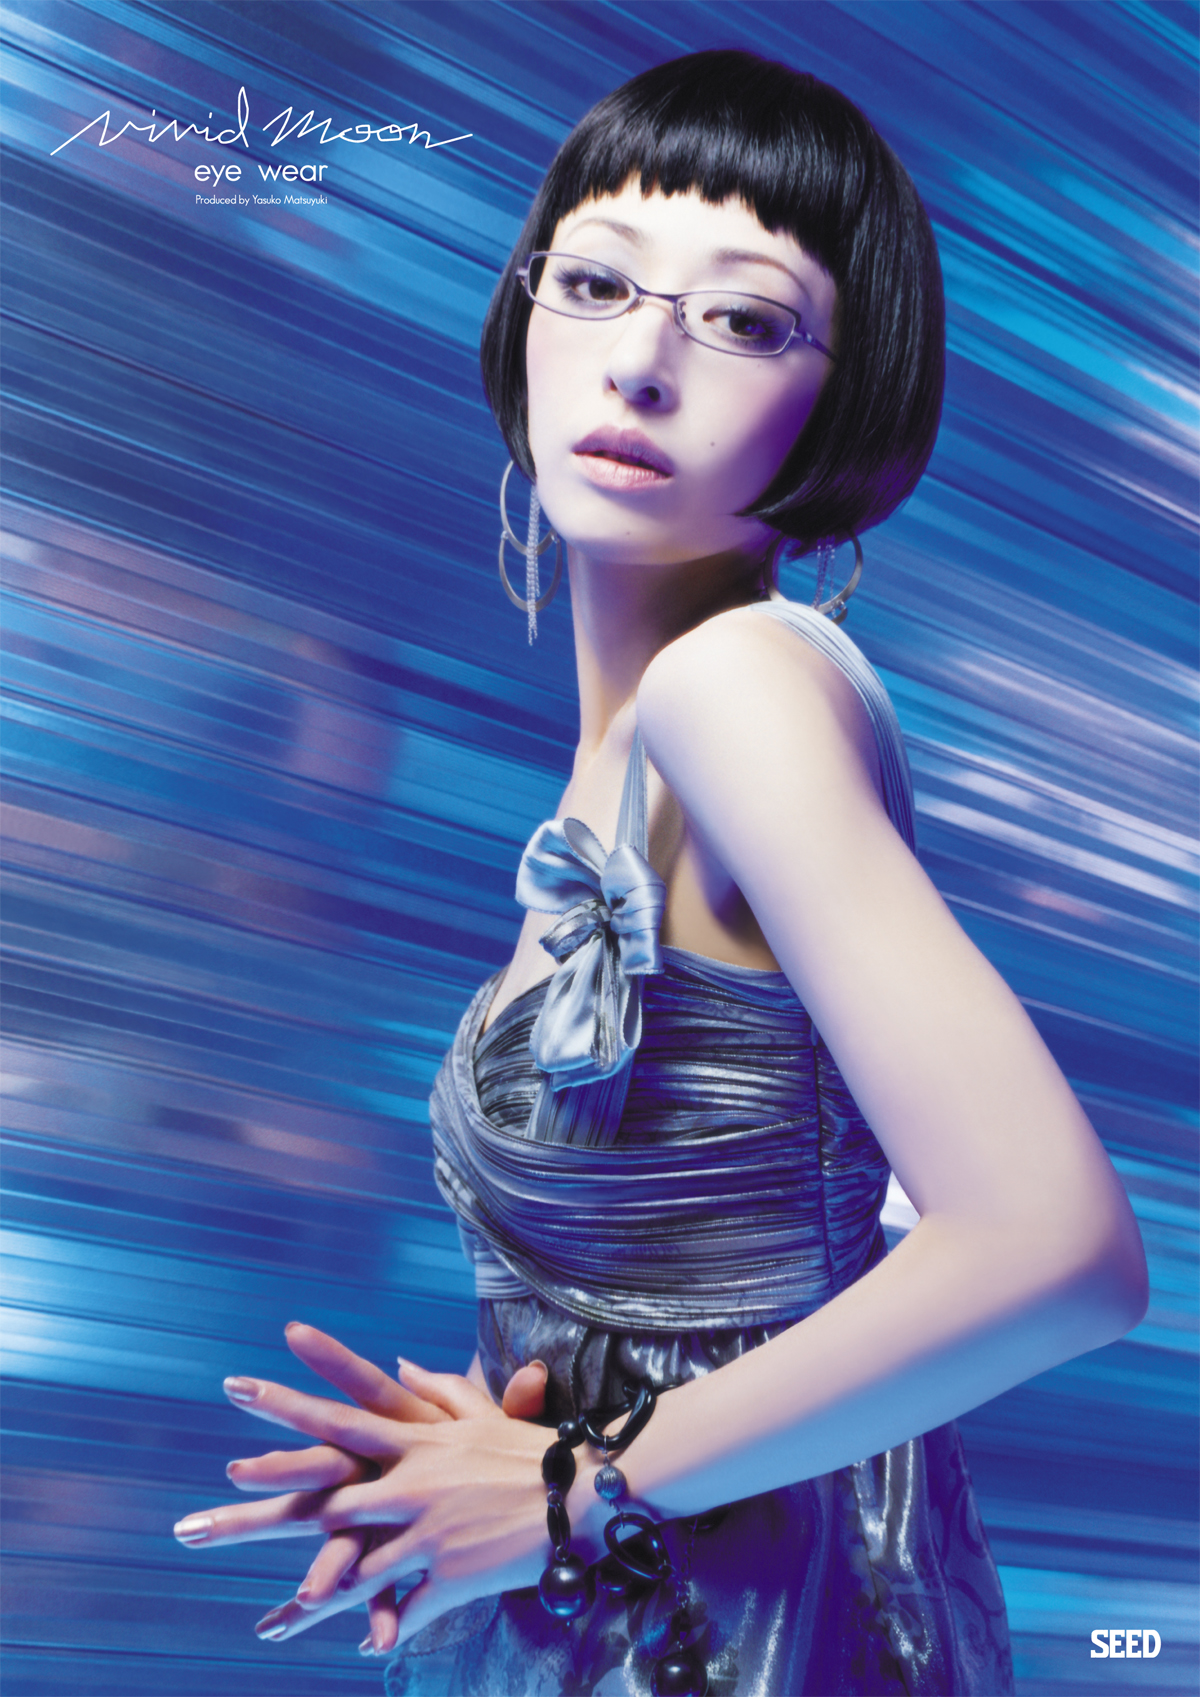 Yasuko Matsuyuki “Vivid Moon” AD